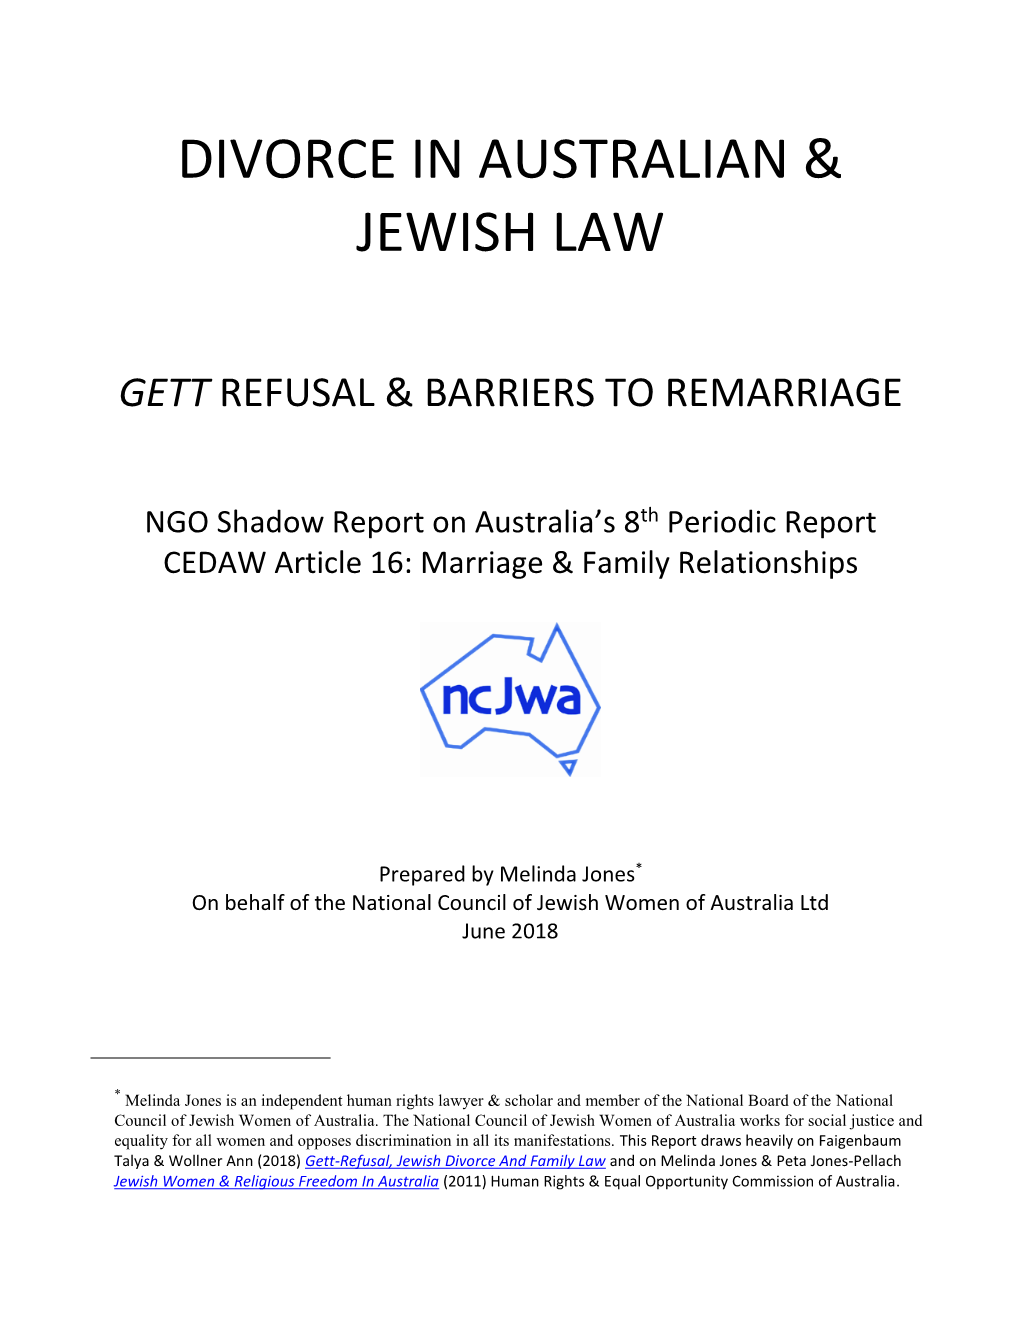 Divorce in Australian & Jewish